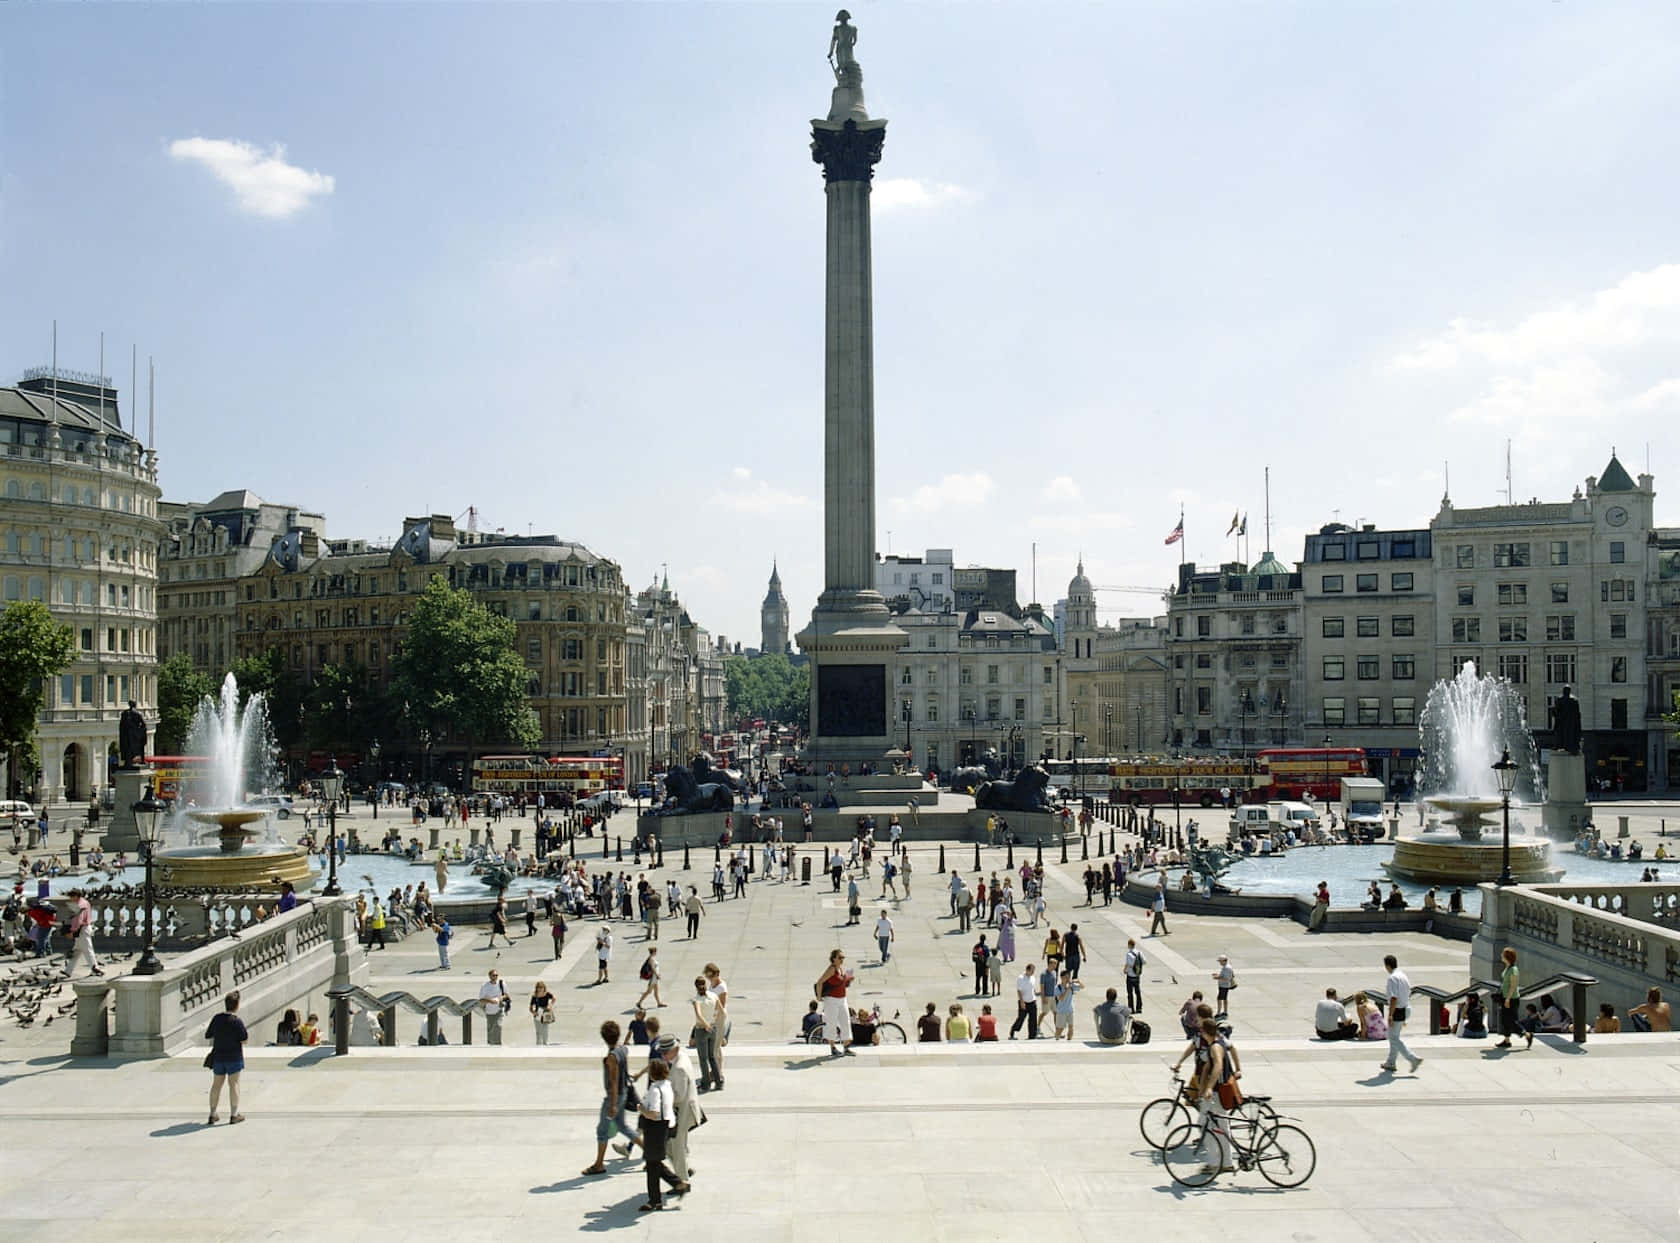 Trafalgar Square Nelson Column Tower Picture